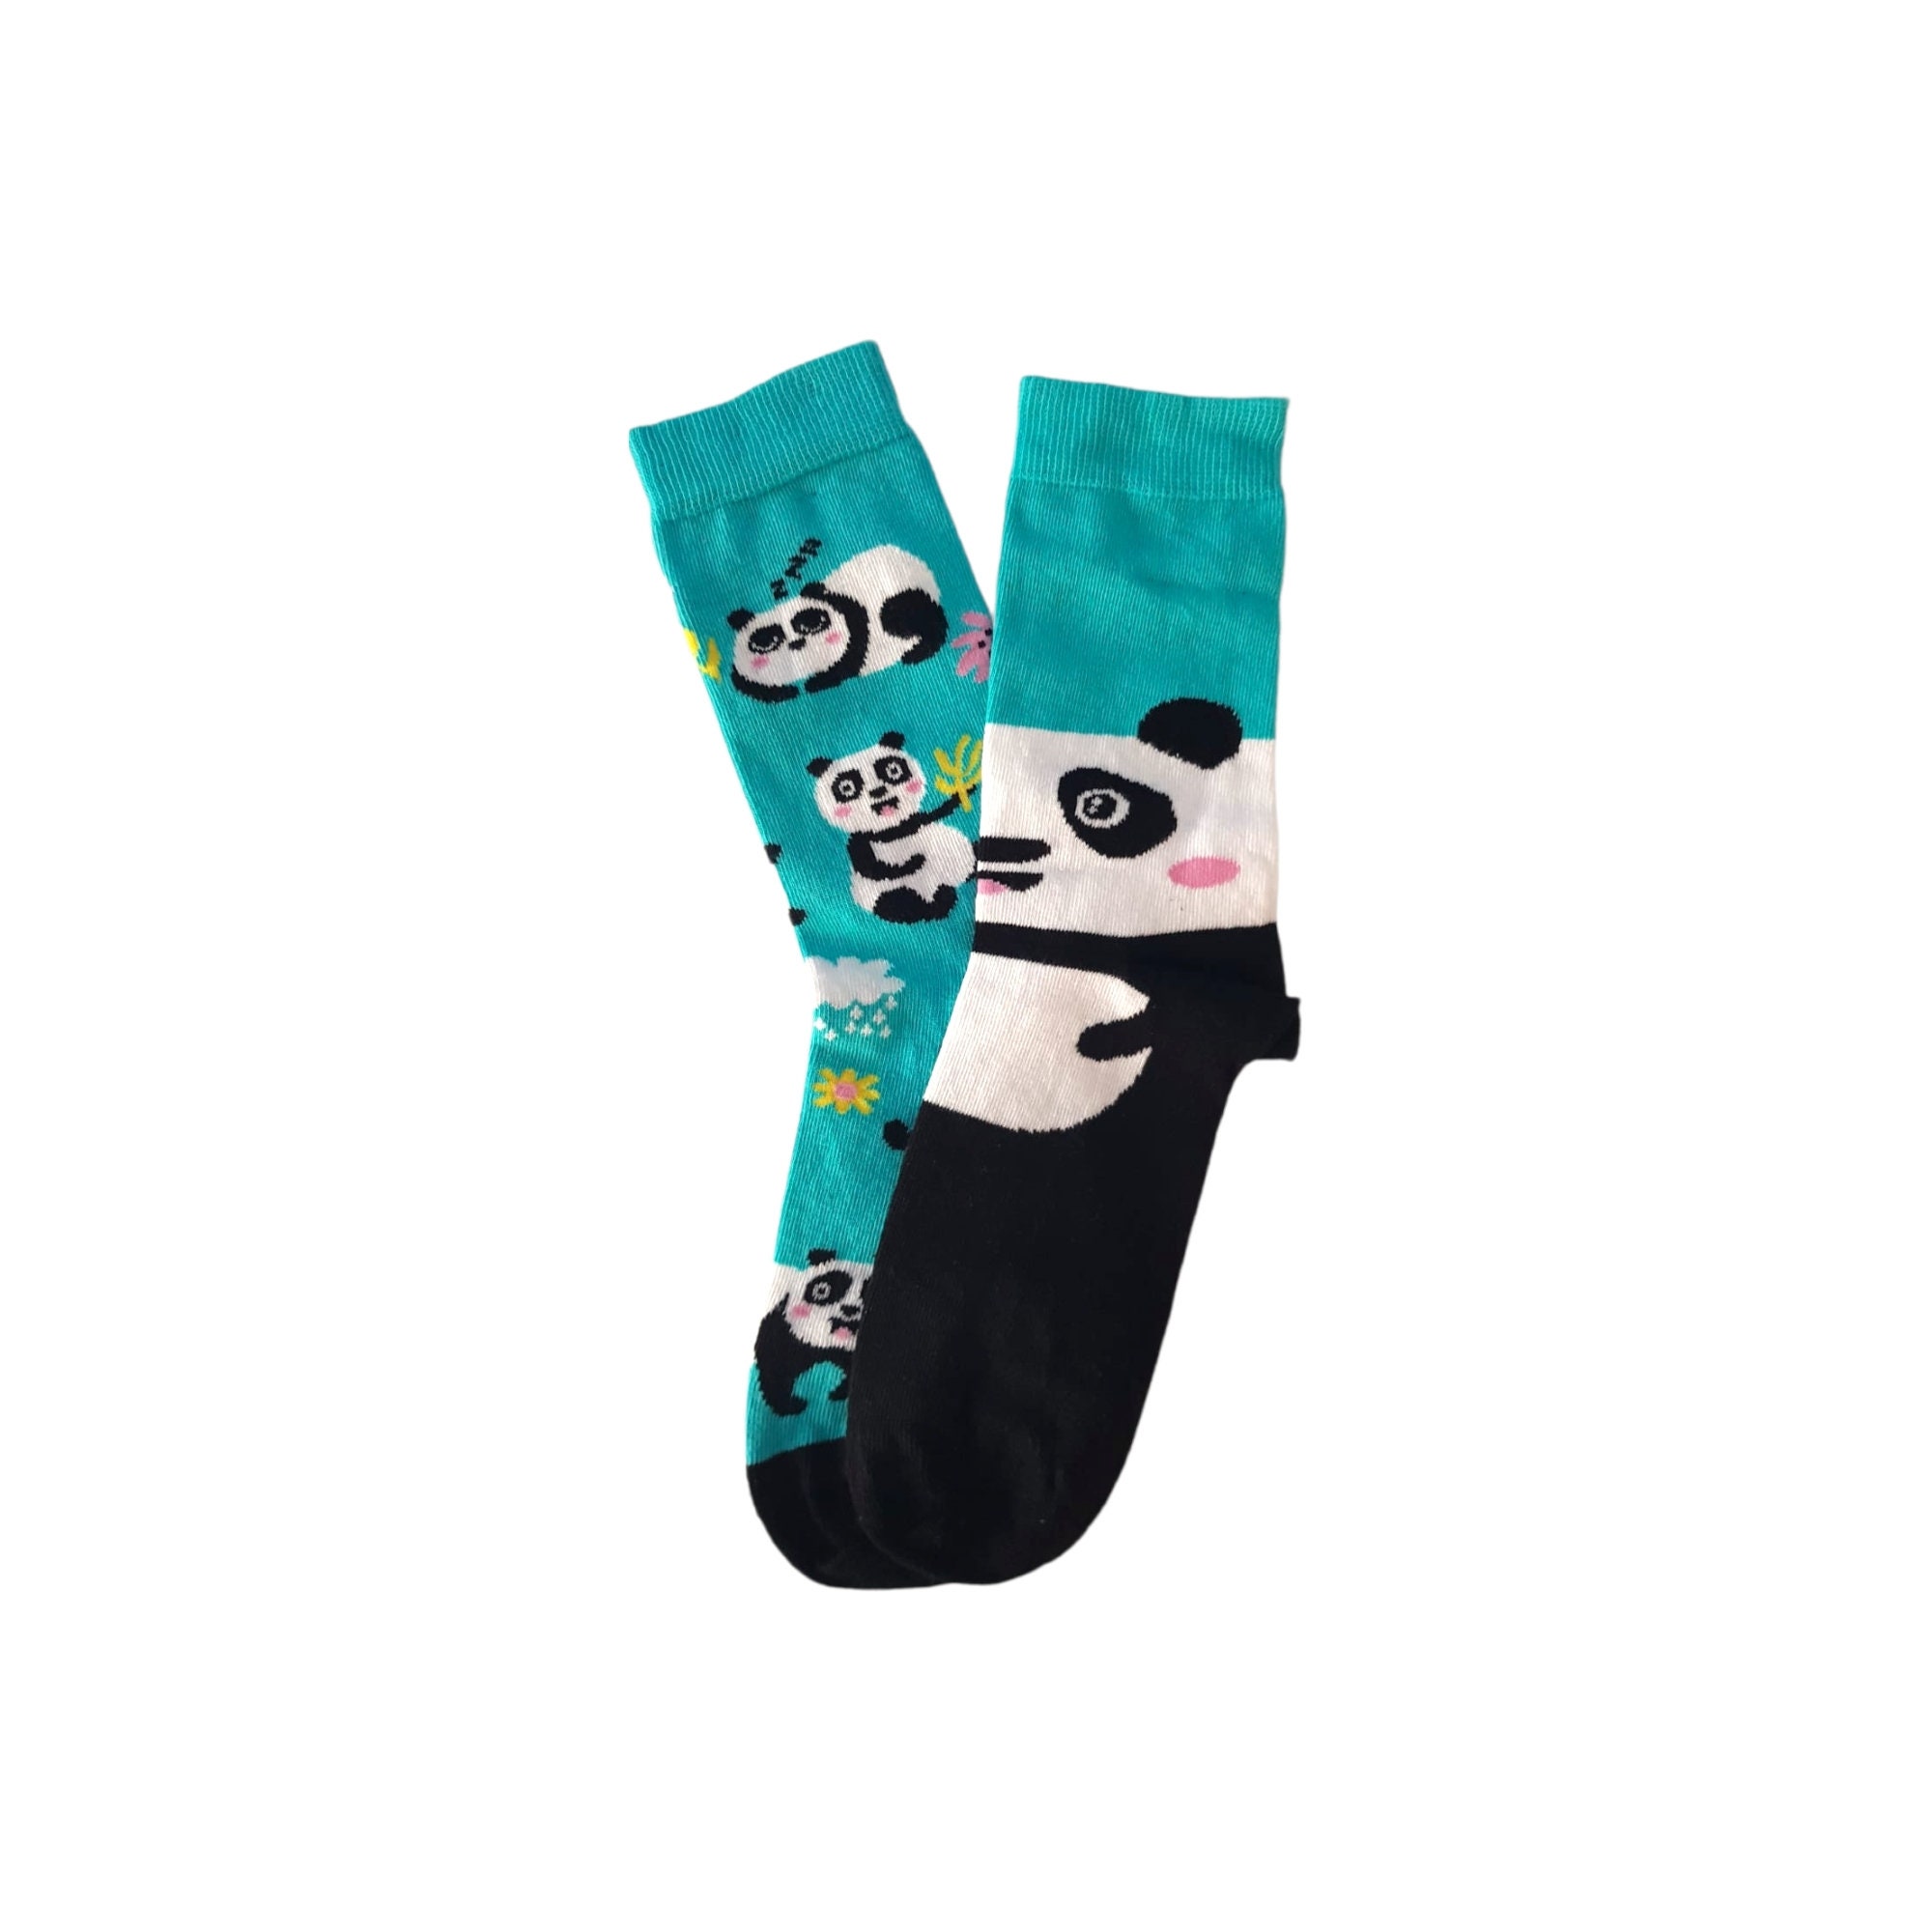 Discover Nature Panda animals Cute Socken